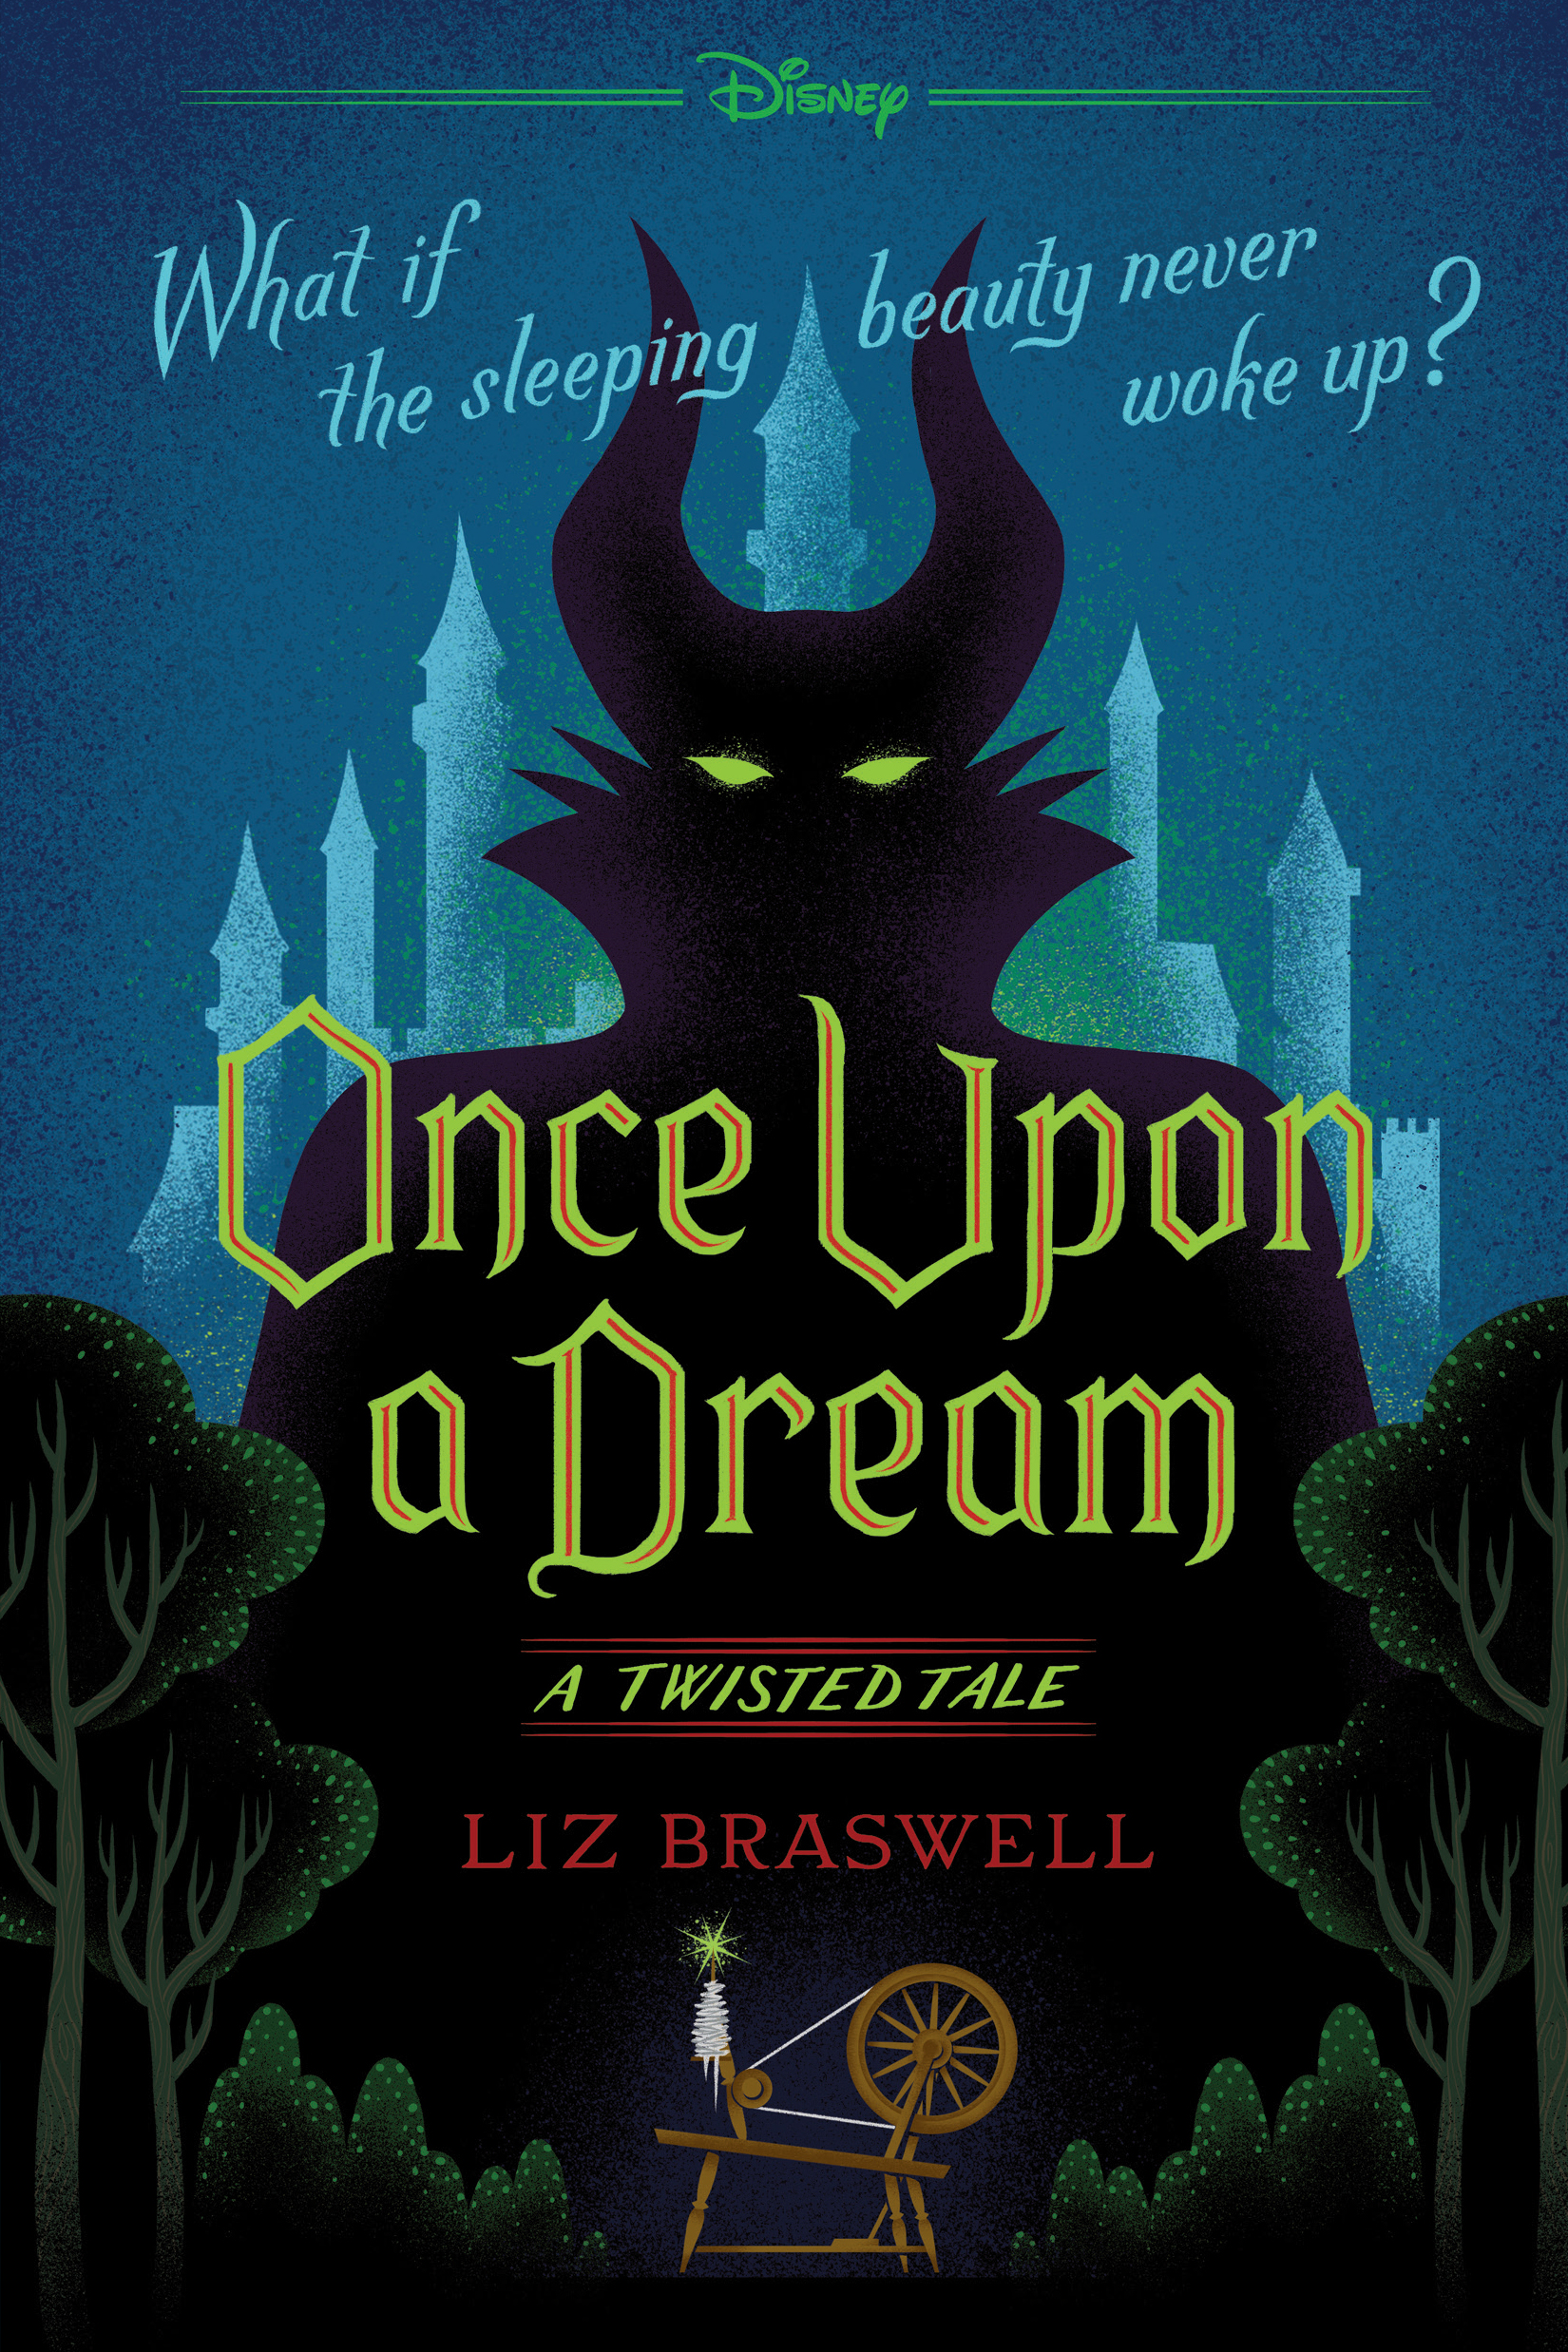 Sleeping Beauty: The Story of Aurora - Disney Book Group; Disney